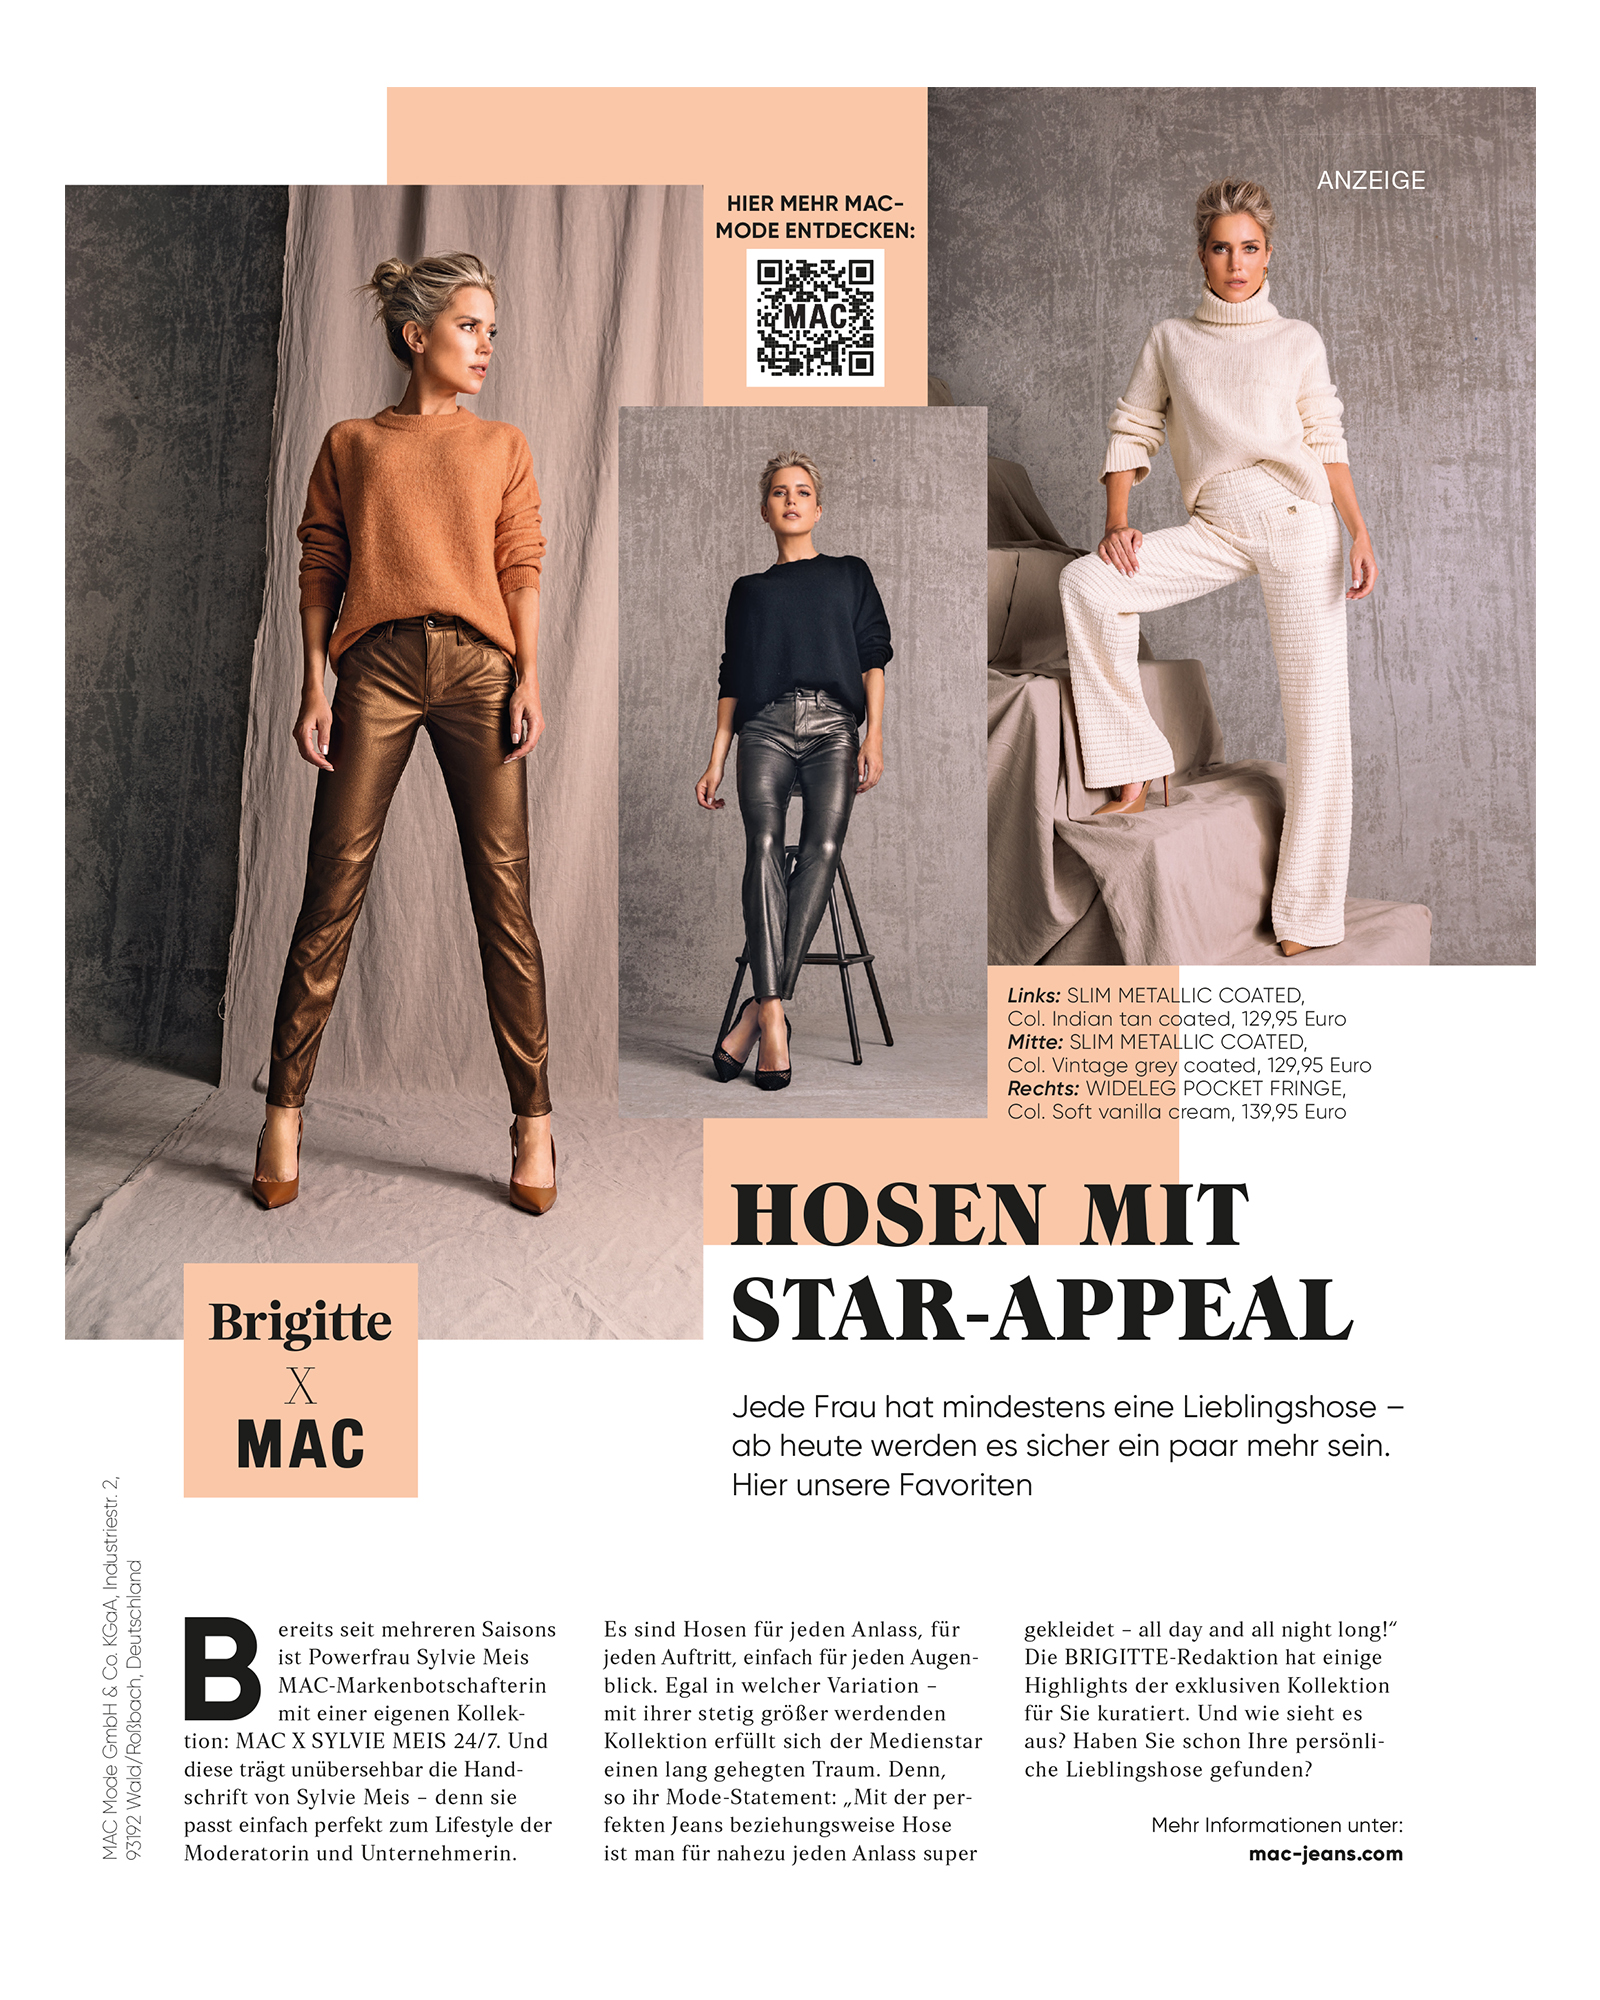 Preview image for Hosen mit Star-Appeal: BRIGITTE x MAC